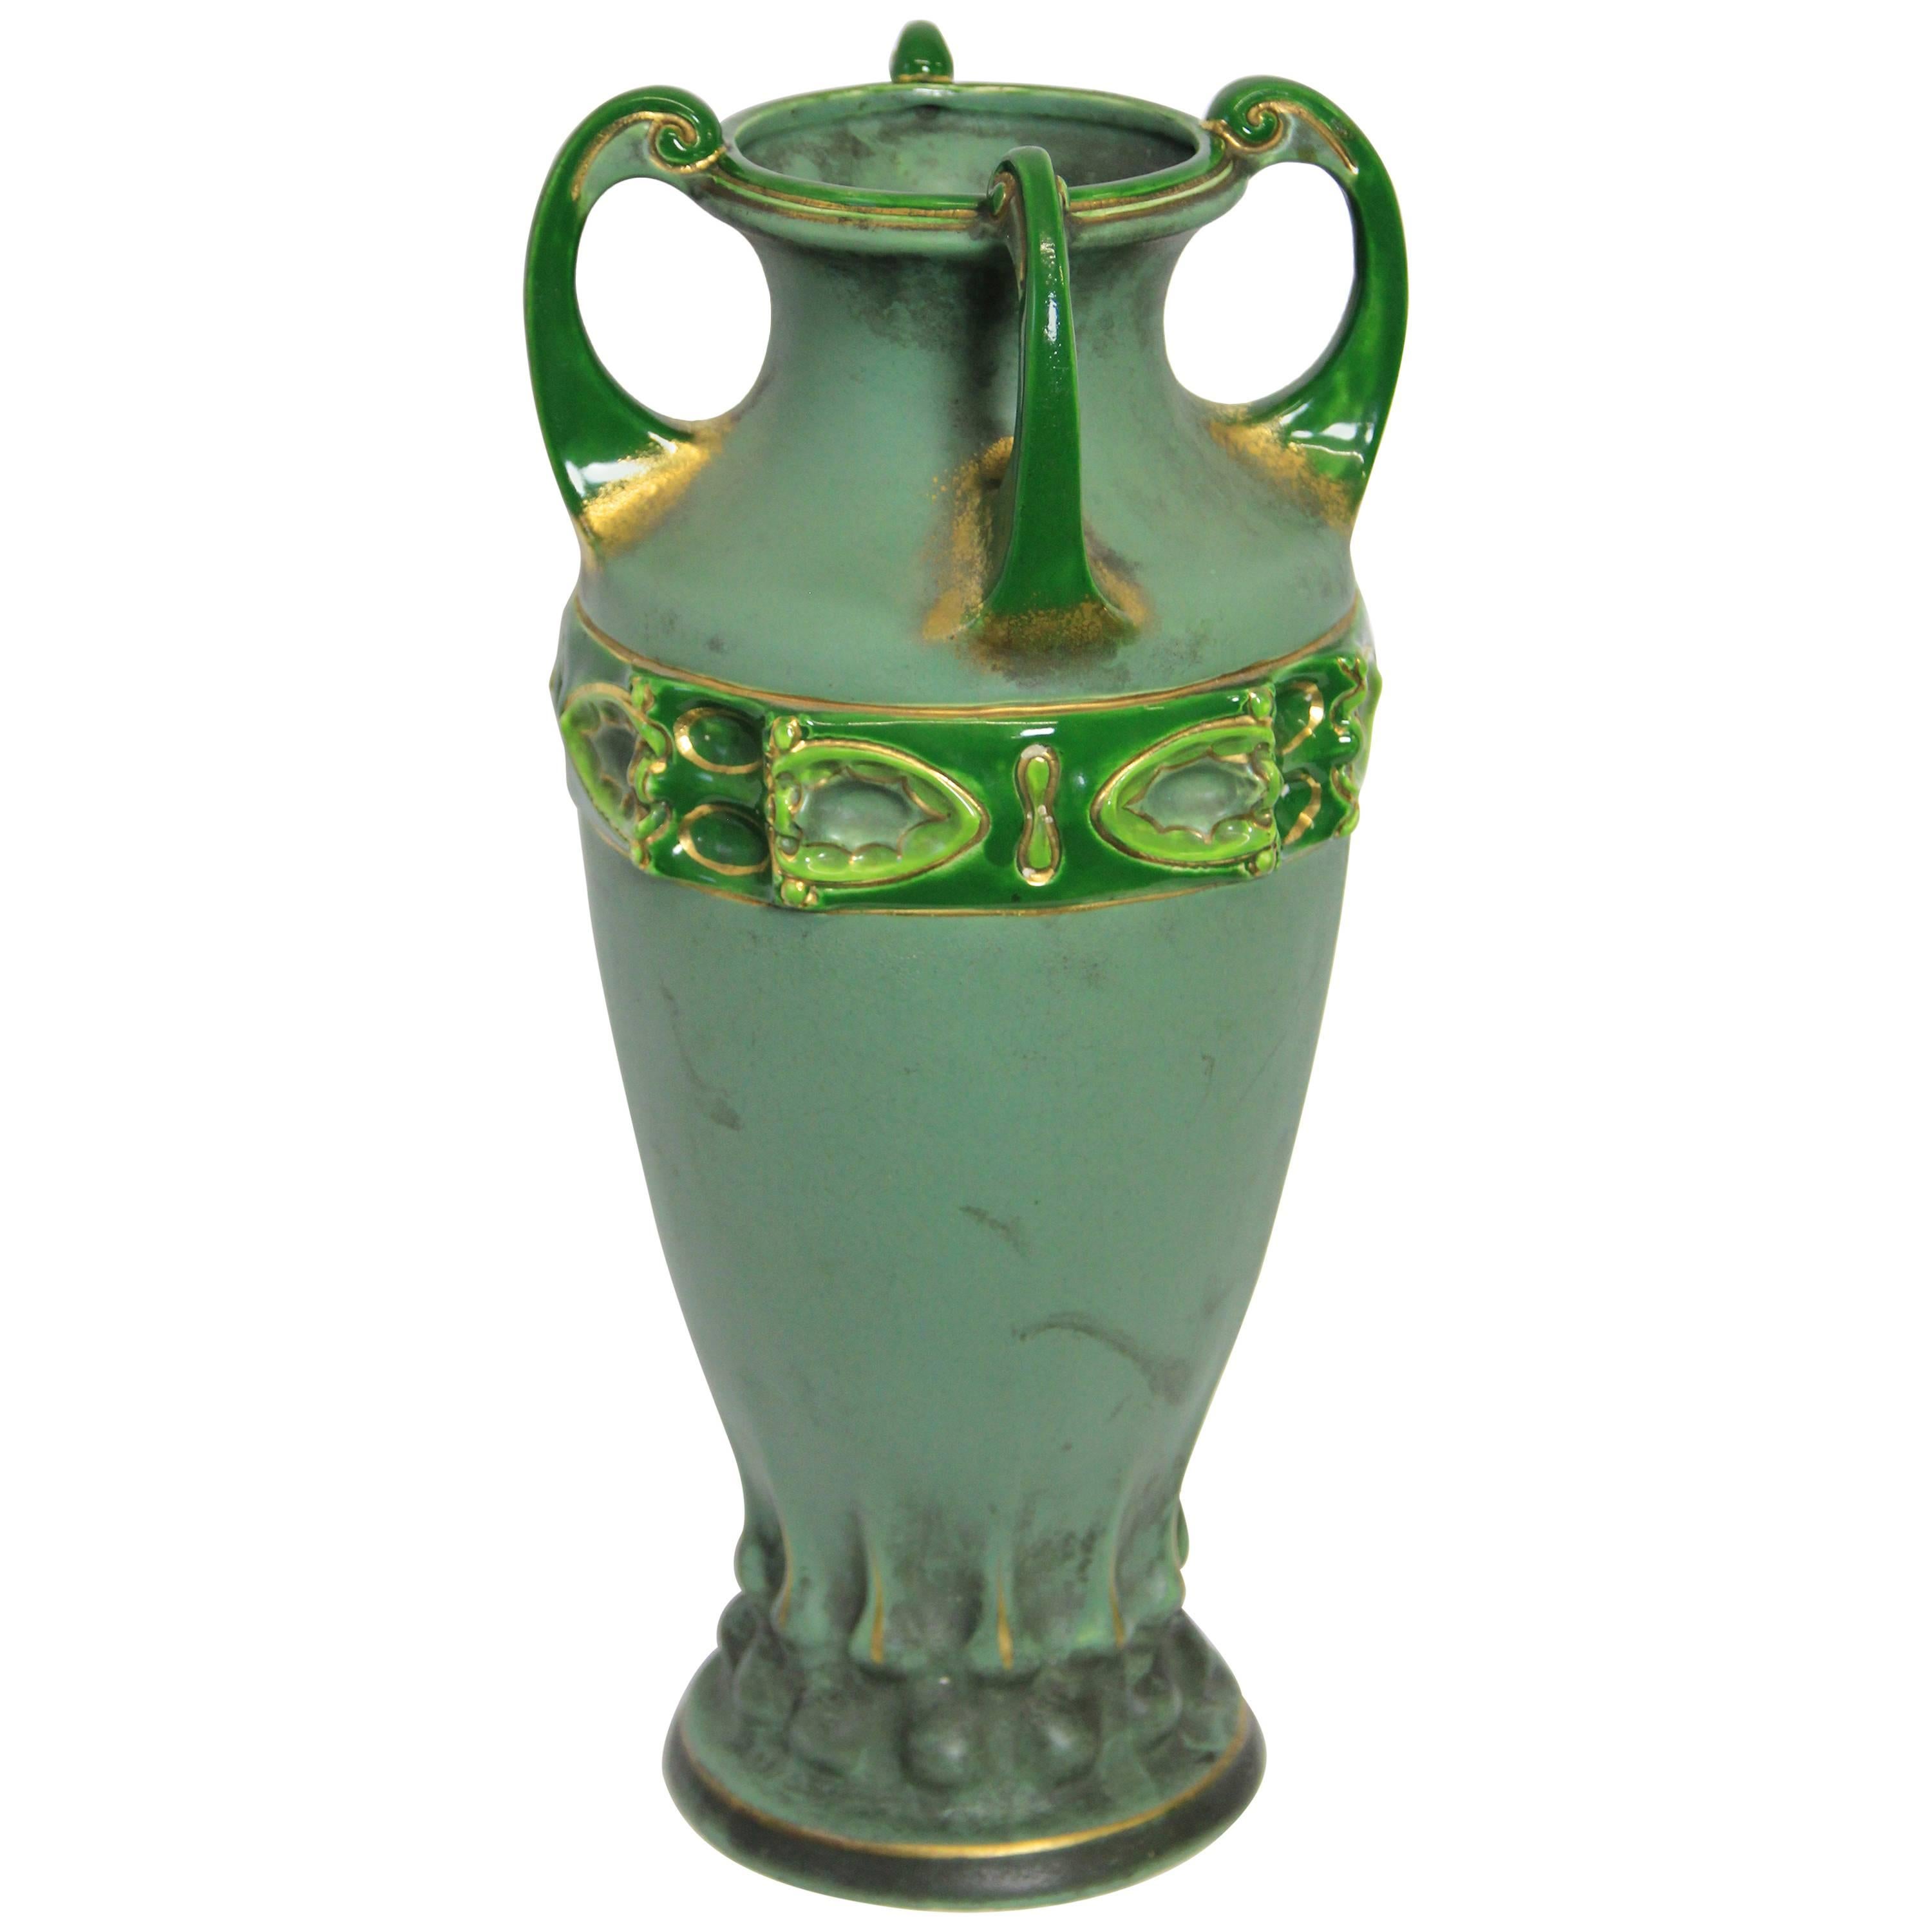 Outstanding Amphora Vase by Amphora Austria, circa 1900